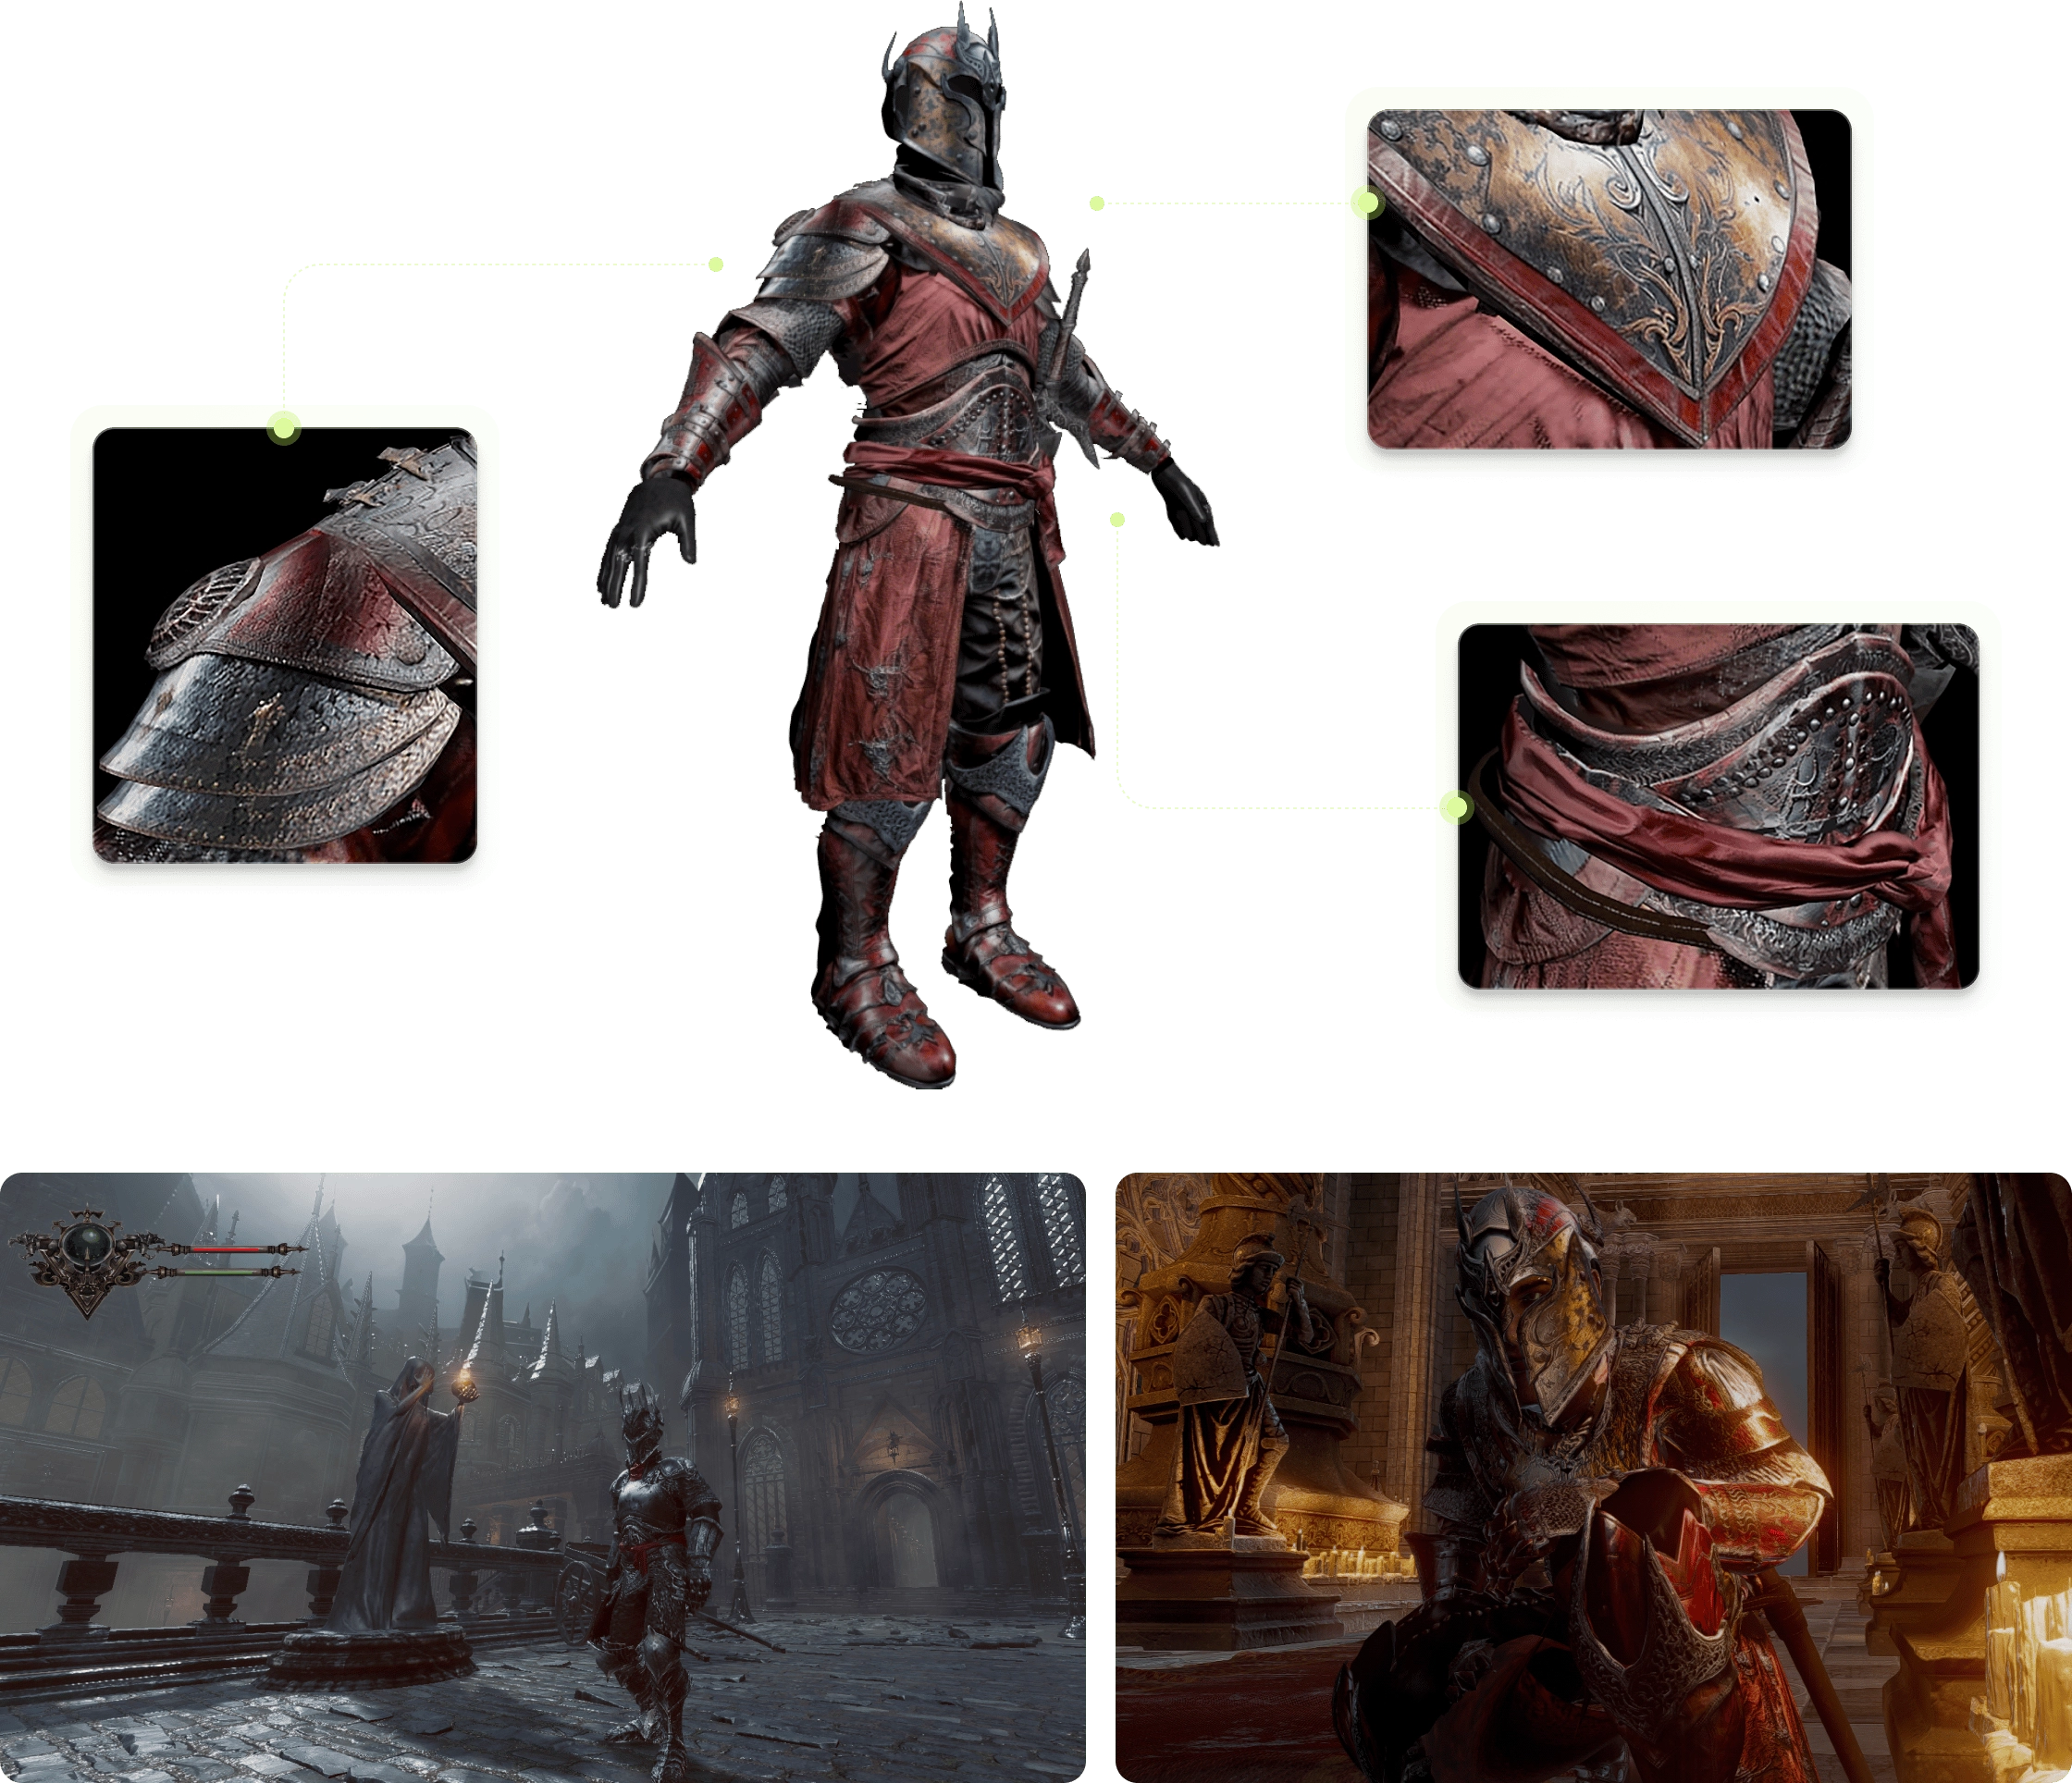 Meshy-textured armor